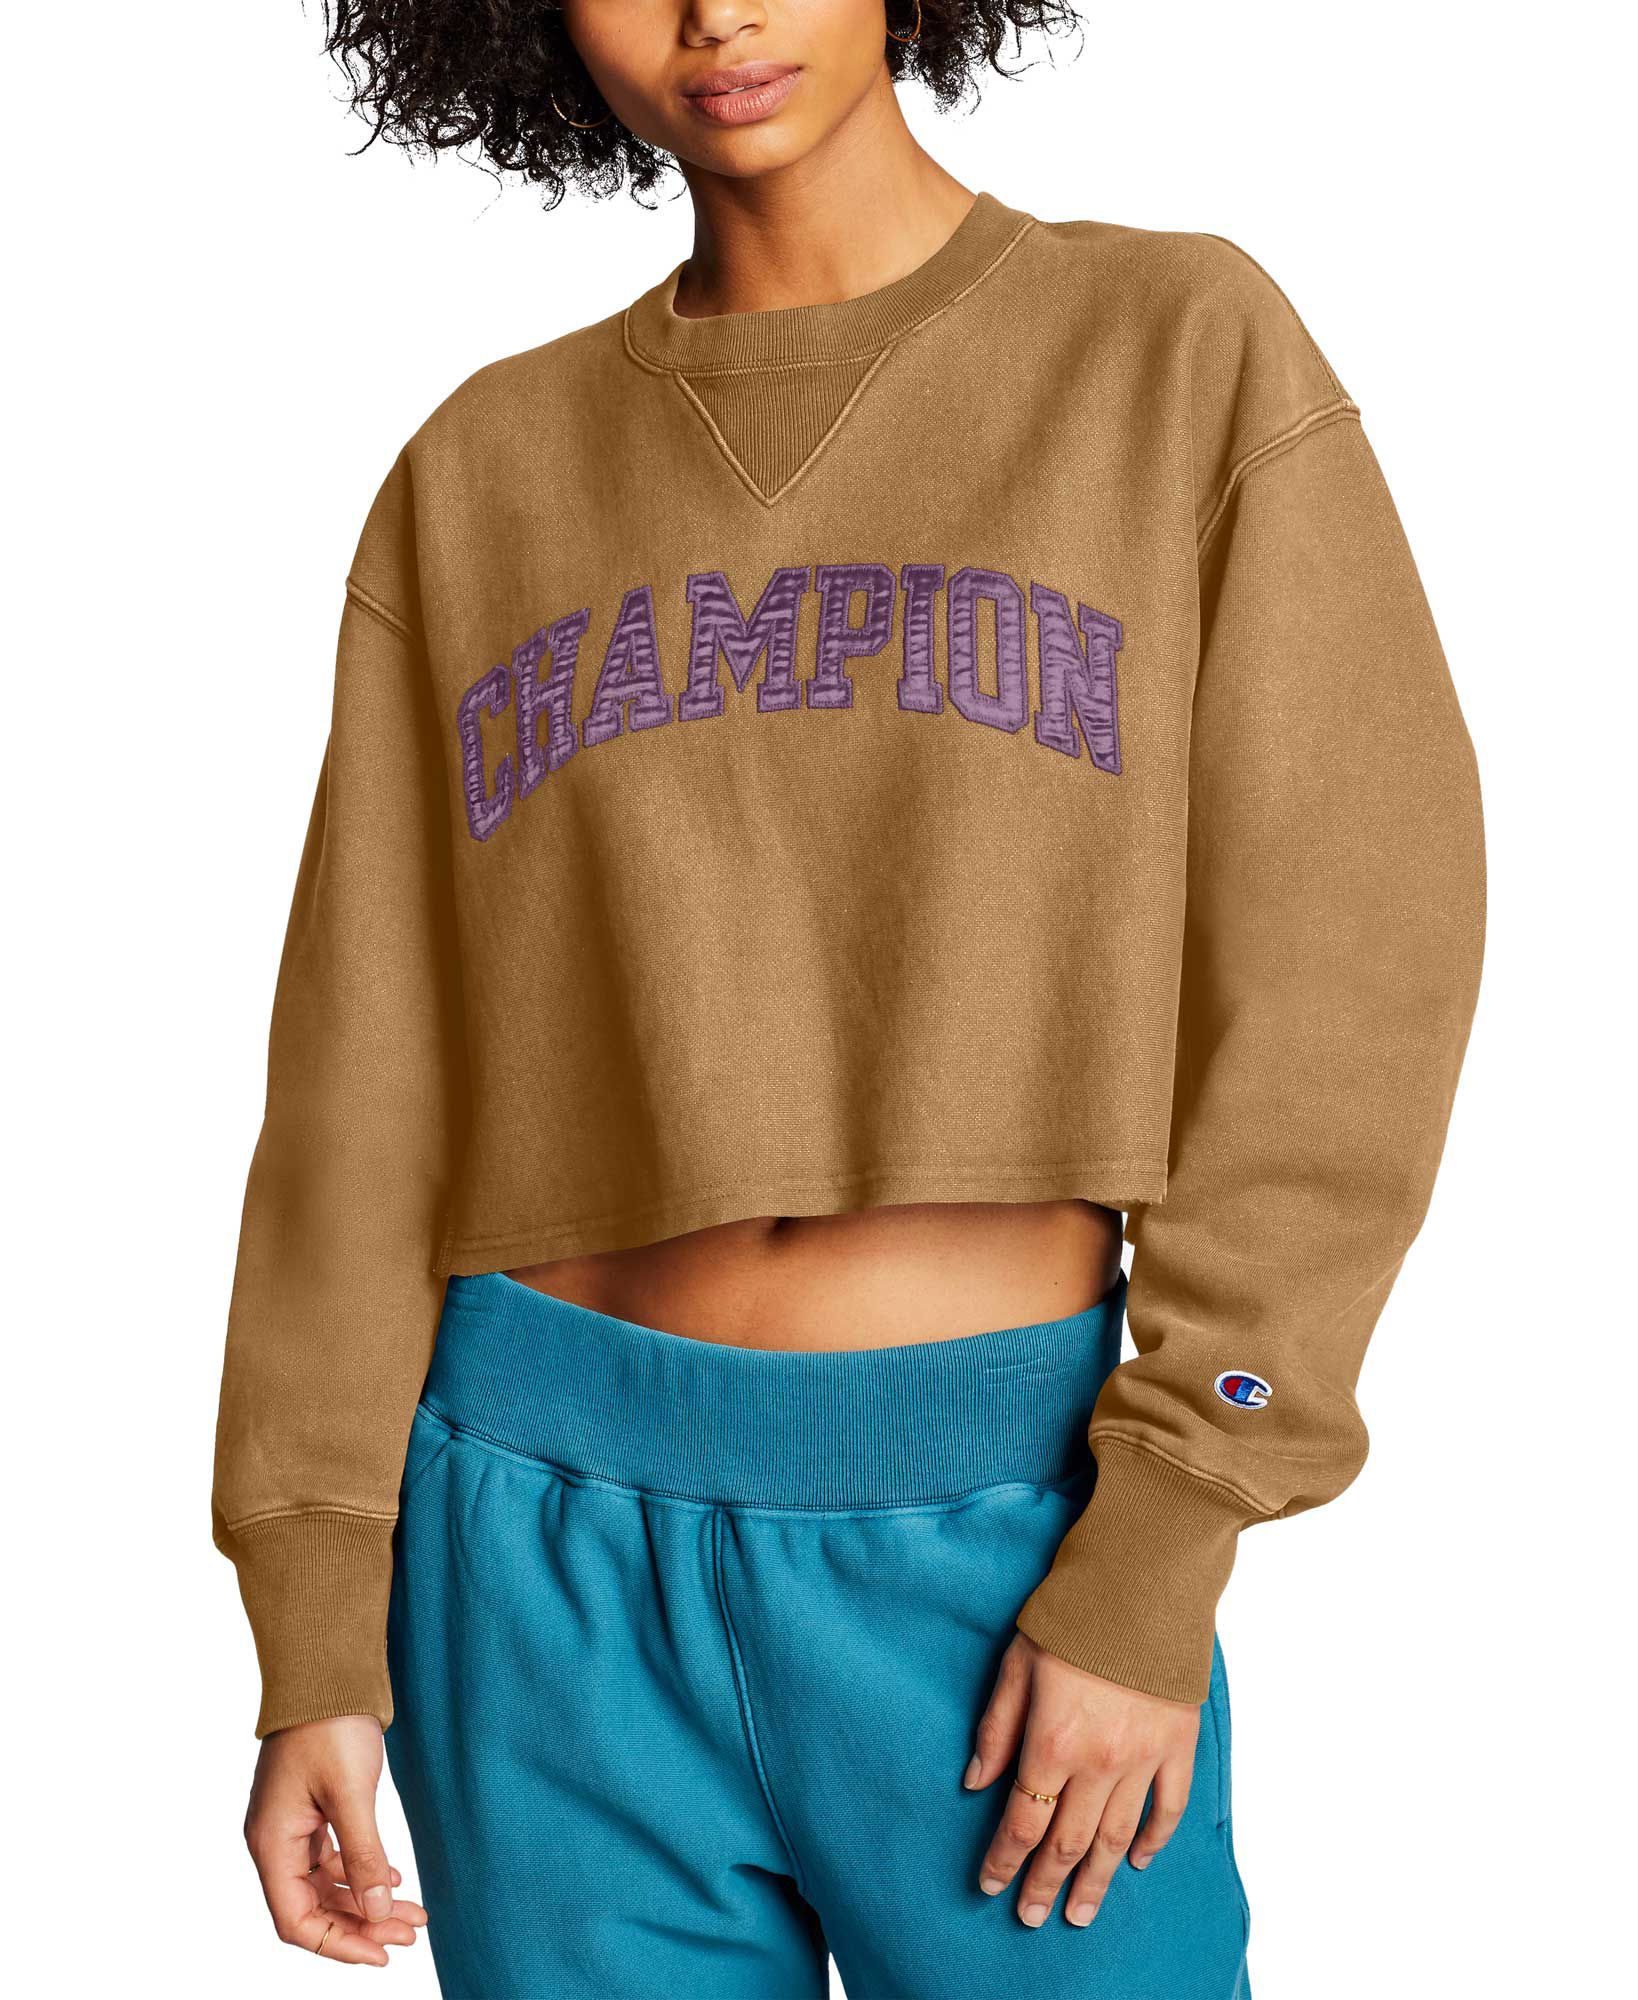 champion sweater crop top